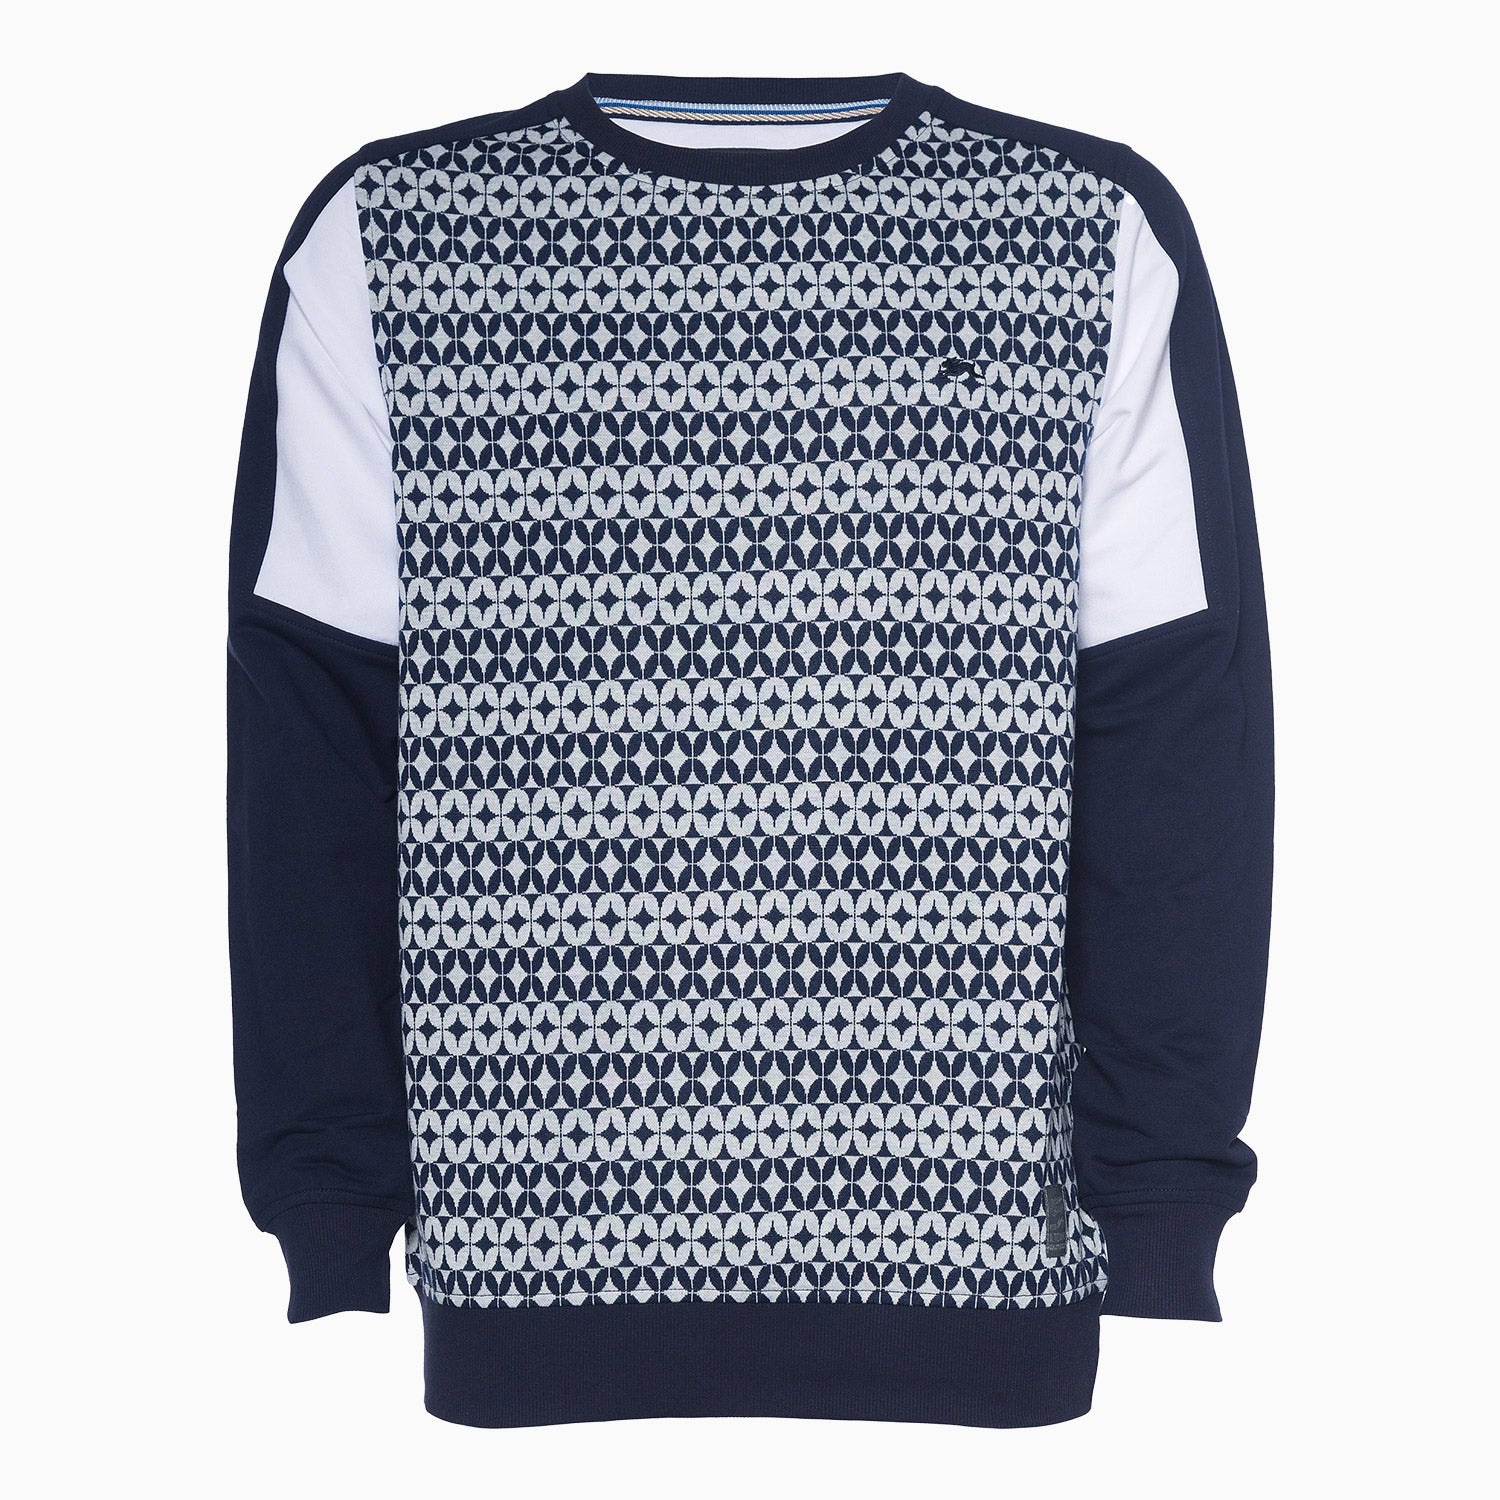 a-tiziano-mens-brookings-jacquard-knit-sweatshirt-41atm4015-navya-tiziano-mens-brookings-jacquard-knit-sweatshirt-41atm4015-navy